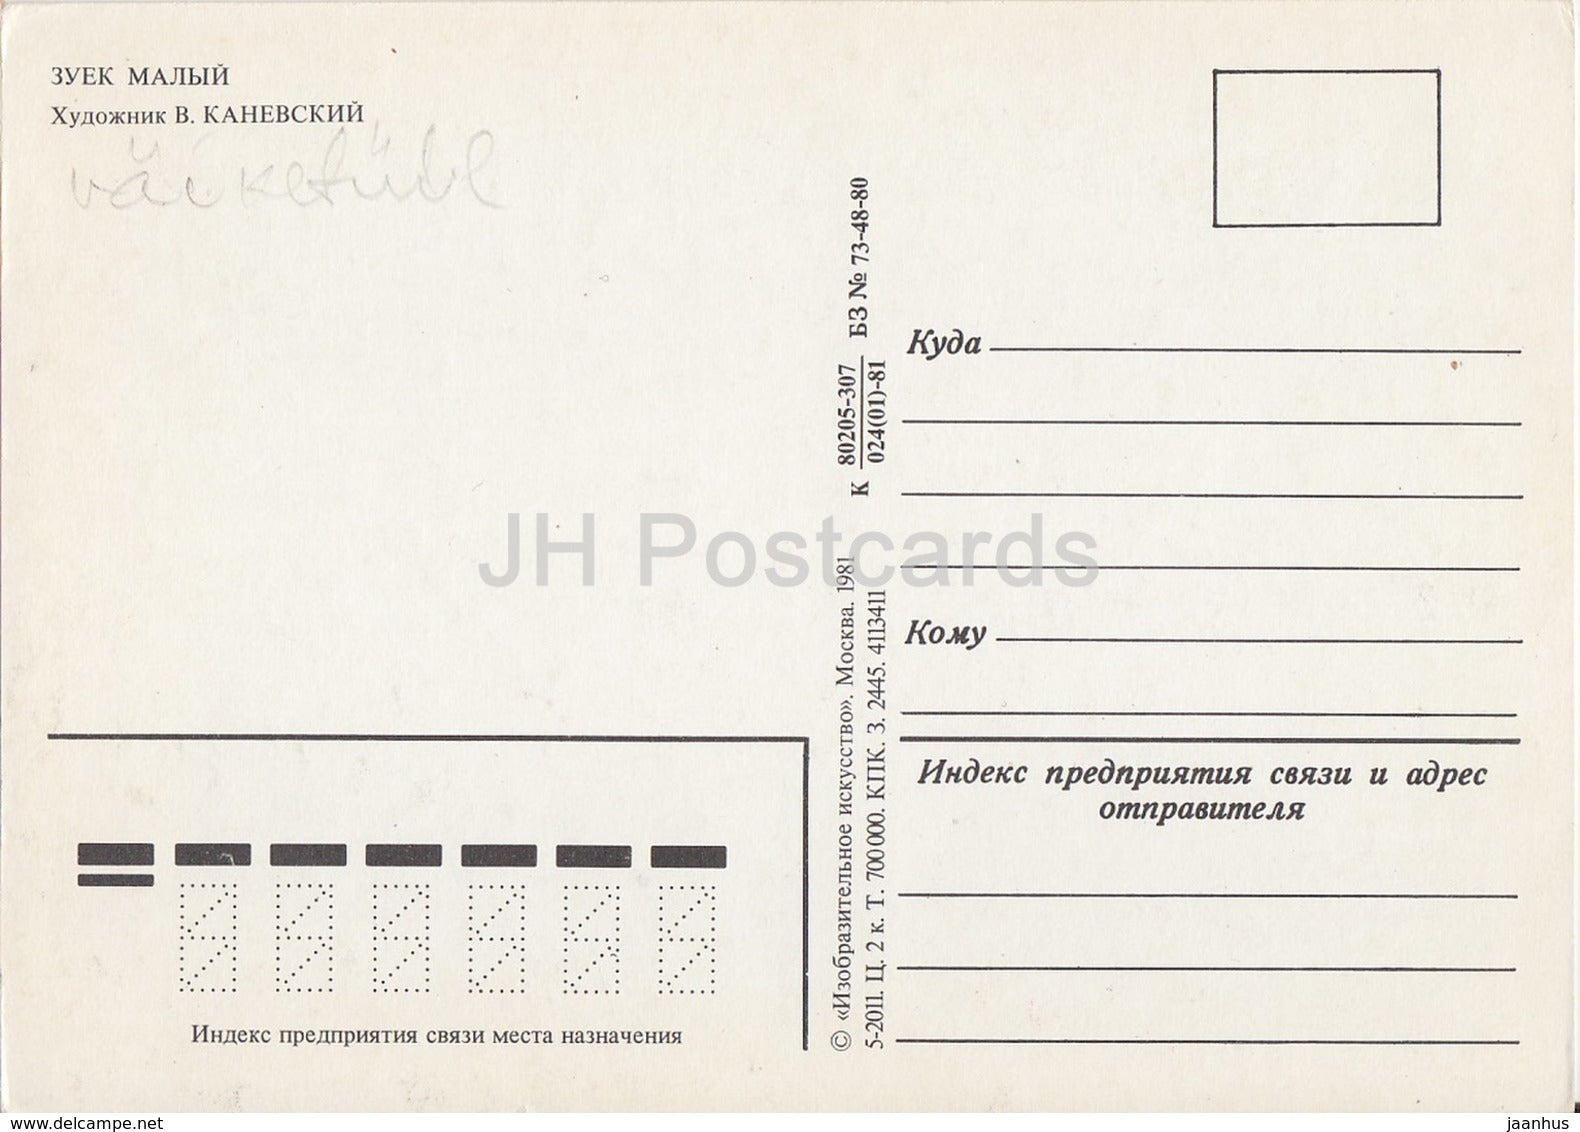 Little ringed plover - Charadrius dubius - birds - animals - illustration - 1980 - Russia USSR - unused - JH Postcards